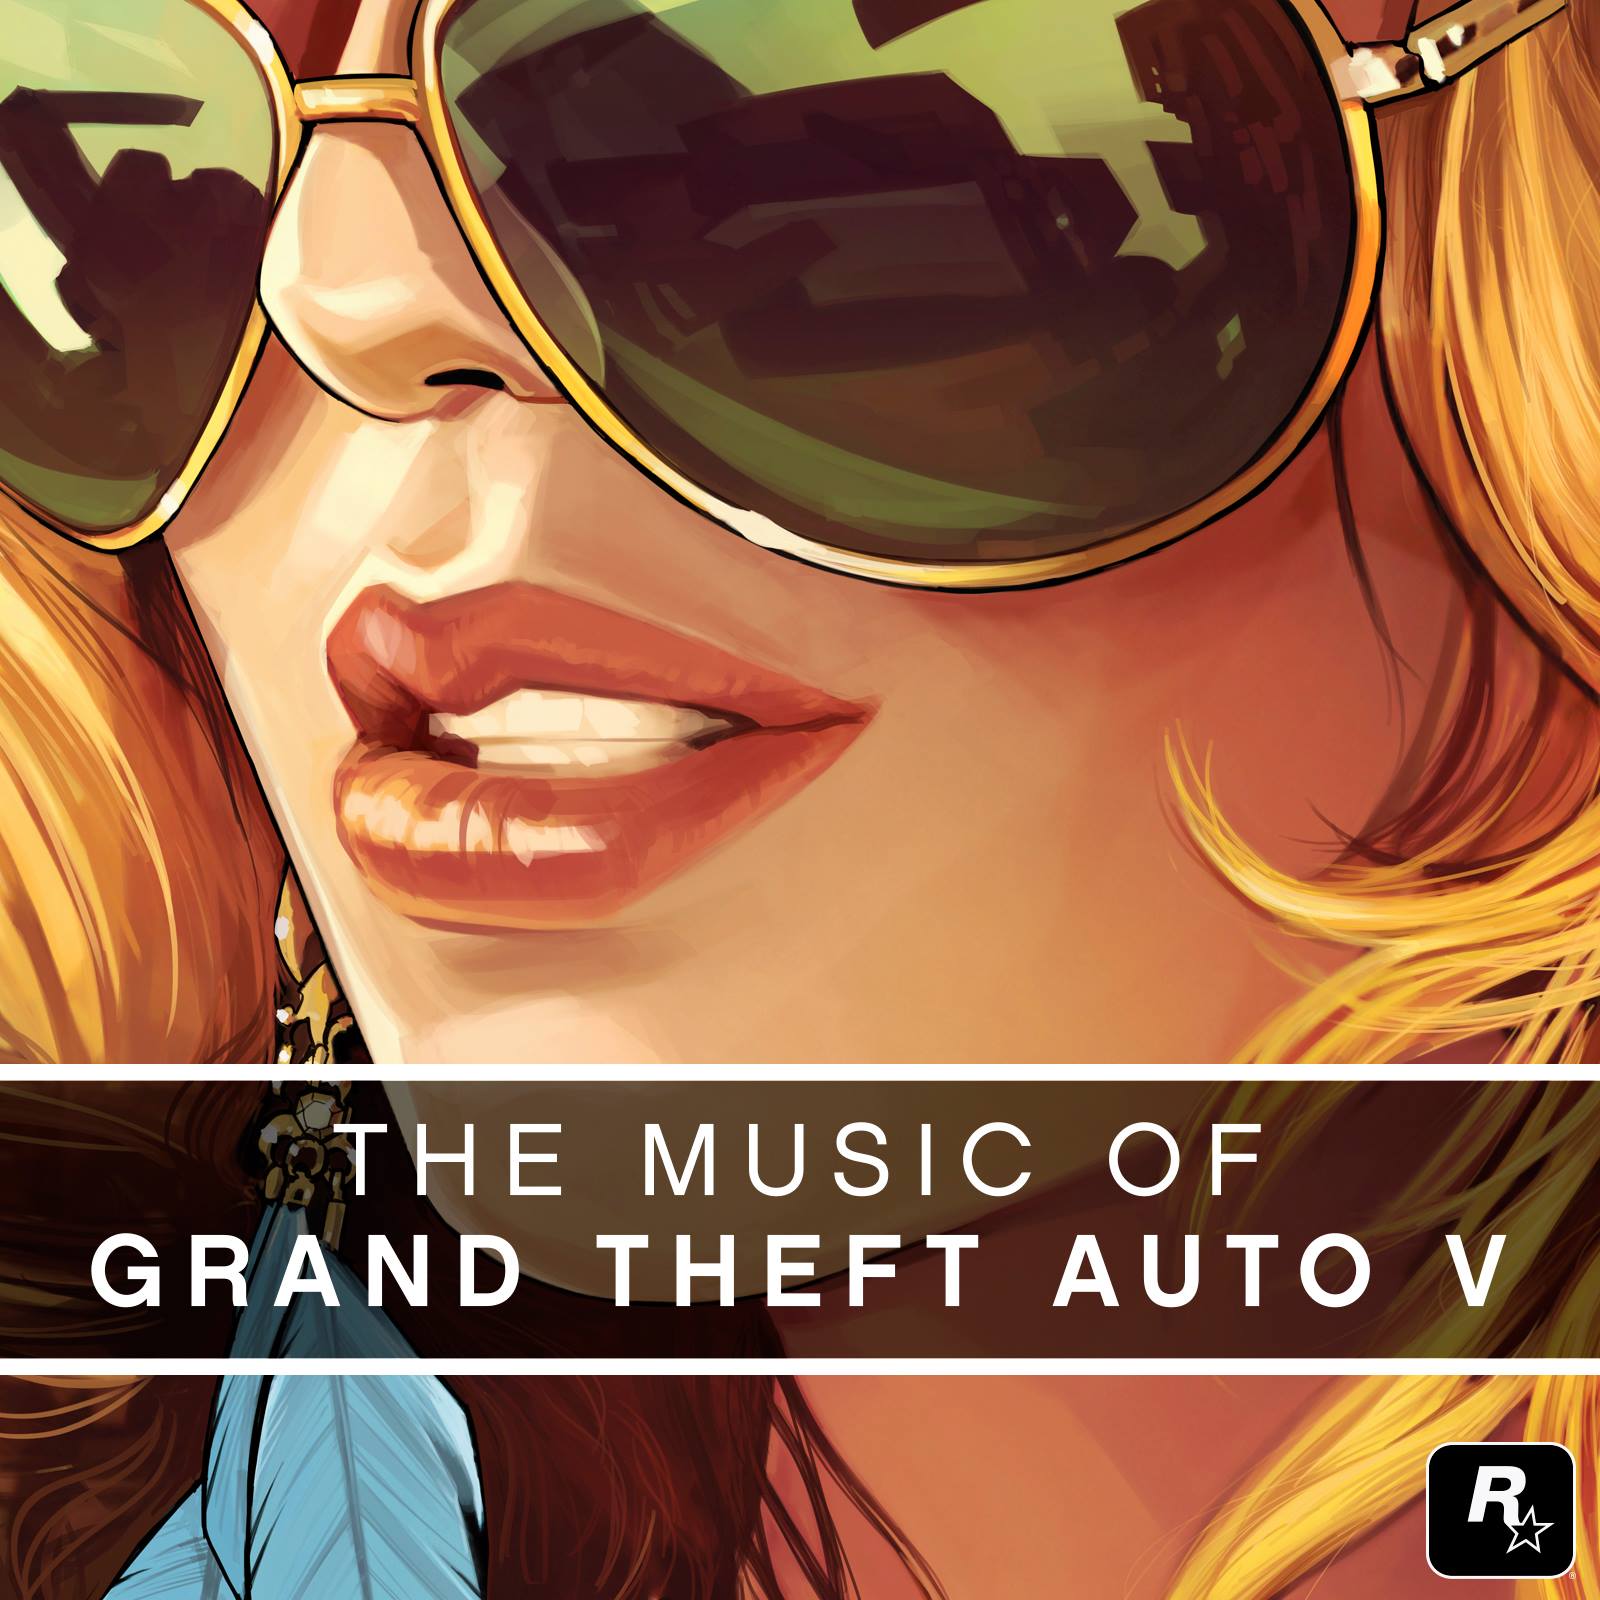 grand theft auto cover art gta 5 - Playground